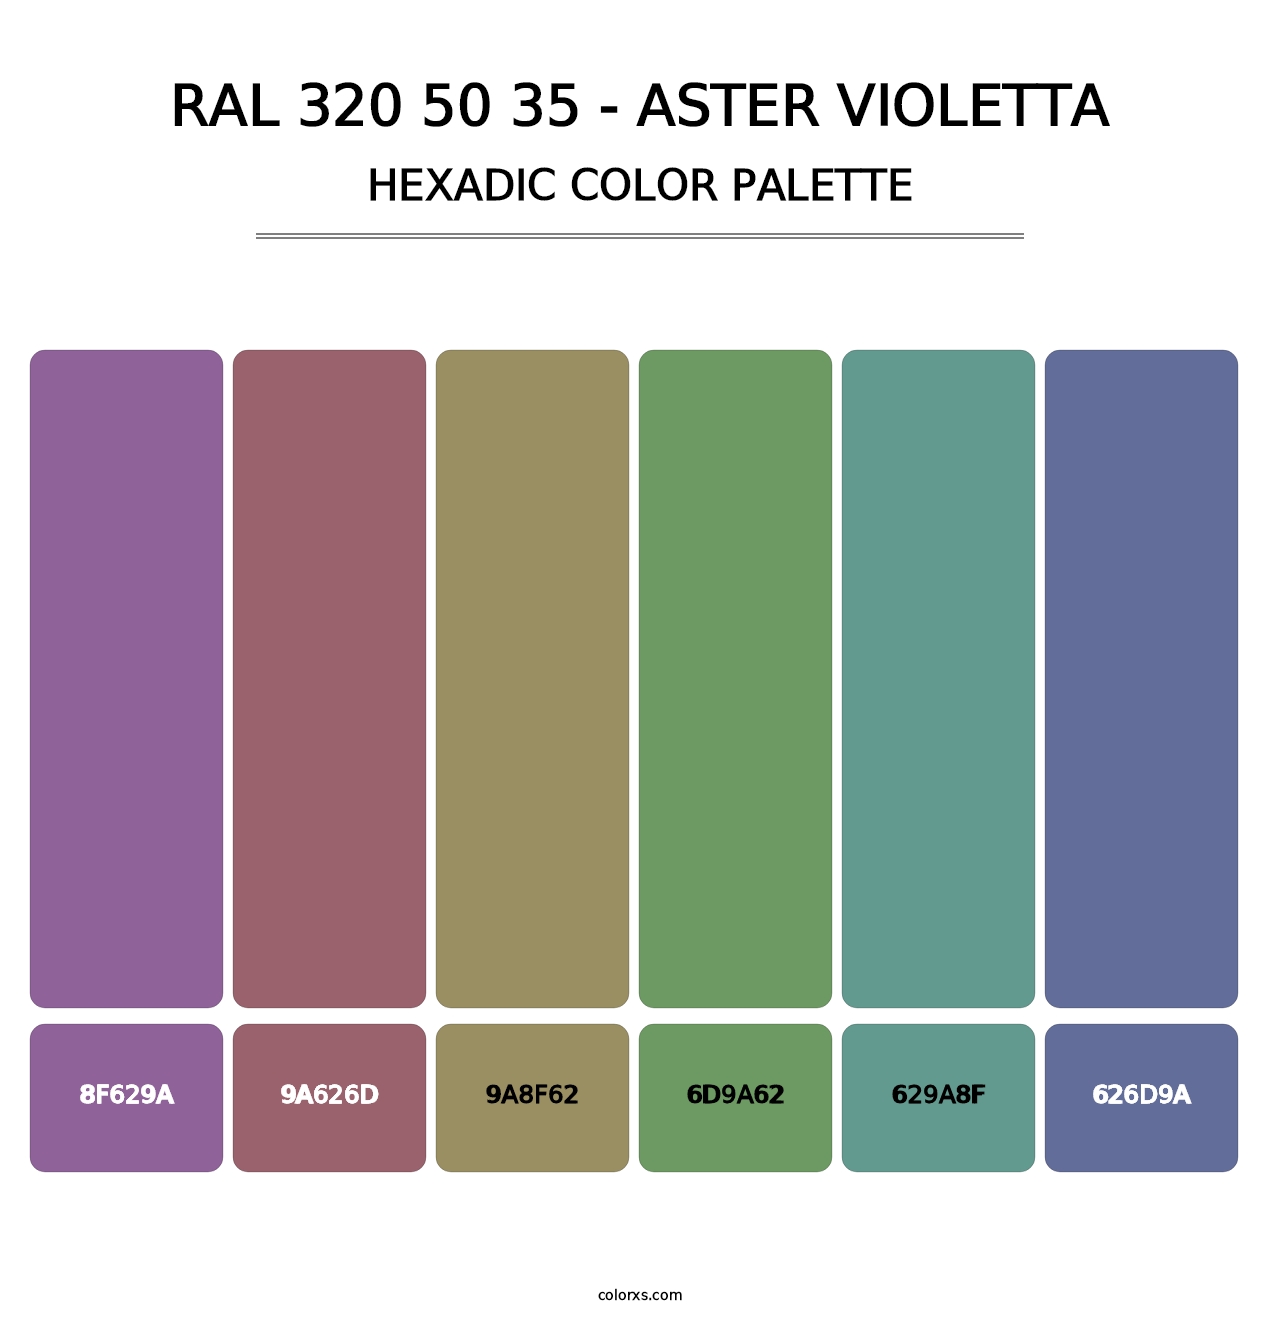 RAL 320 50 35 - Aster Violetta - Hexadic Color Palette